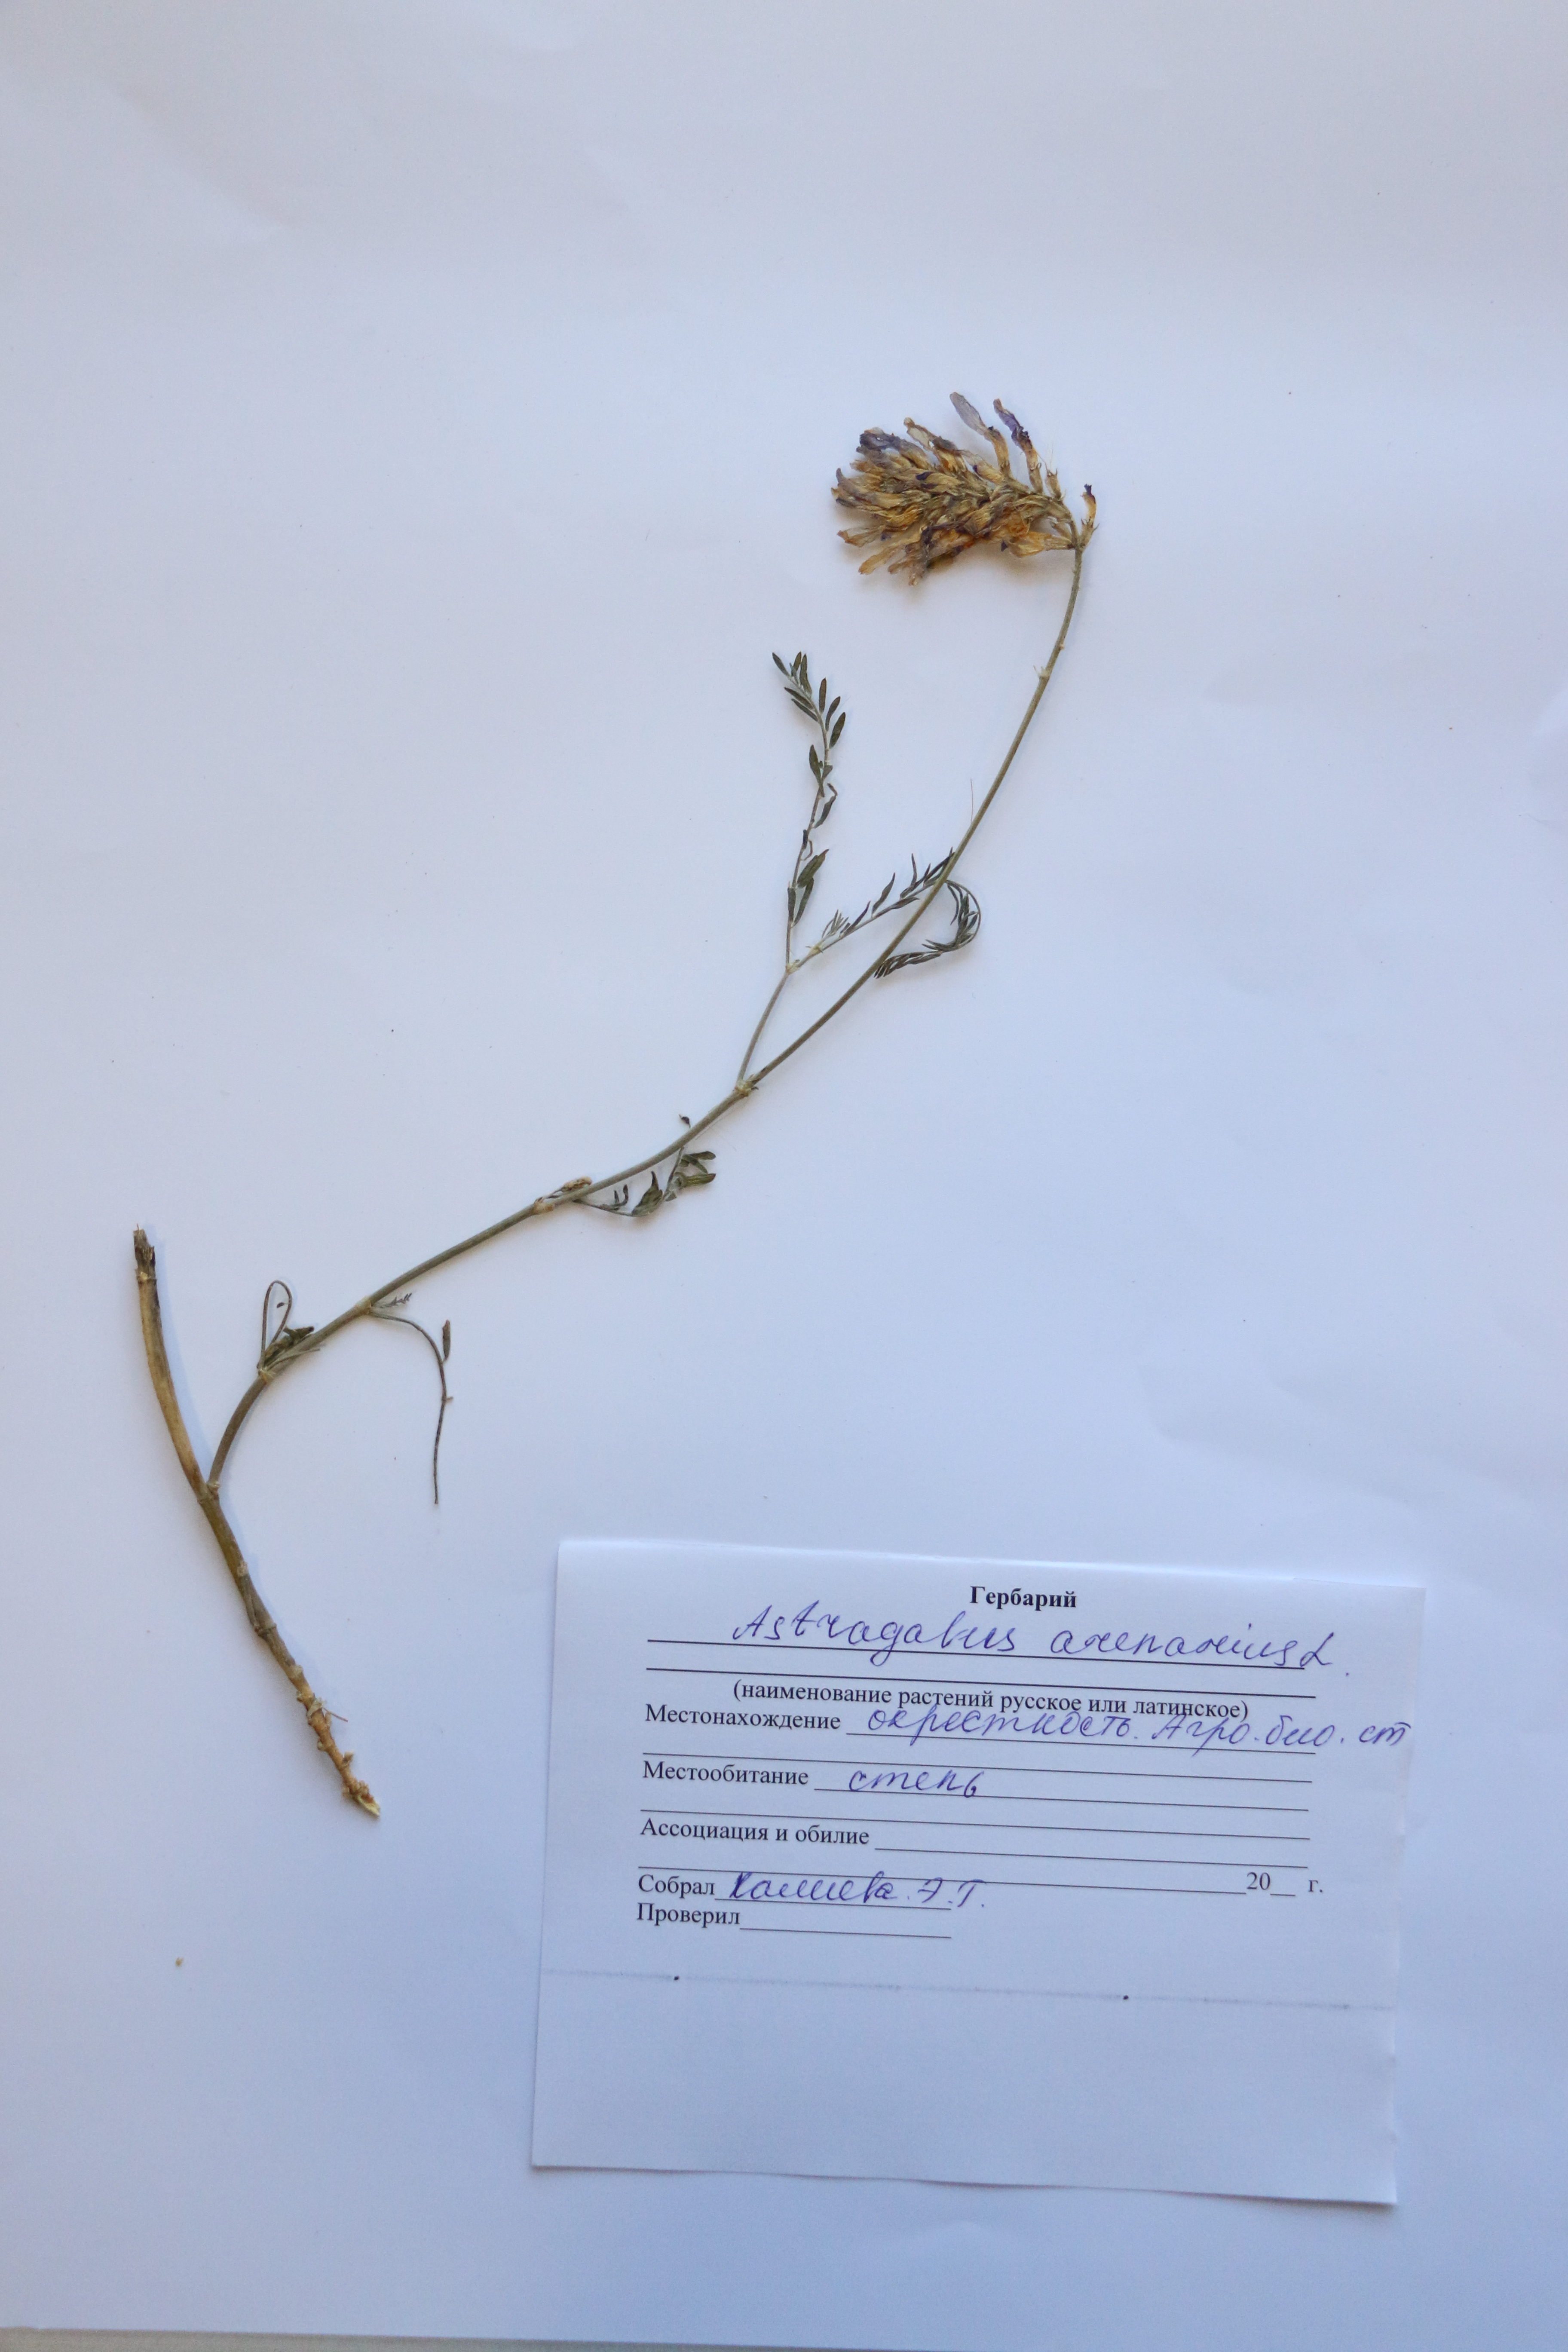 Astragalus arenarius L.- Астрагал  песчаный - Құмды ақшатай таспа 